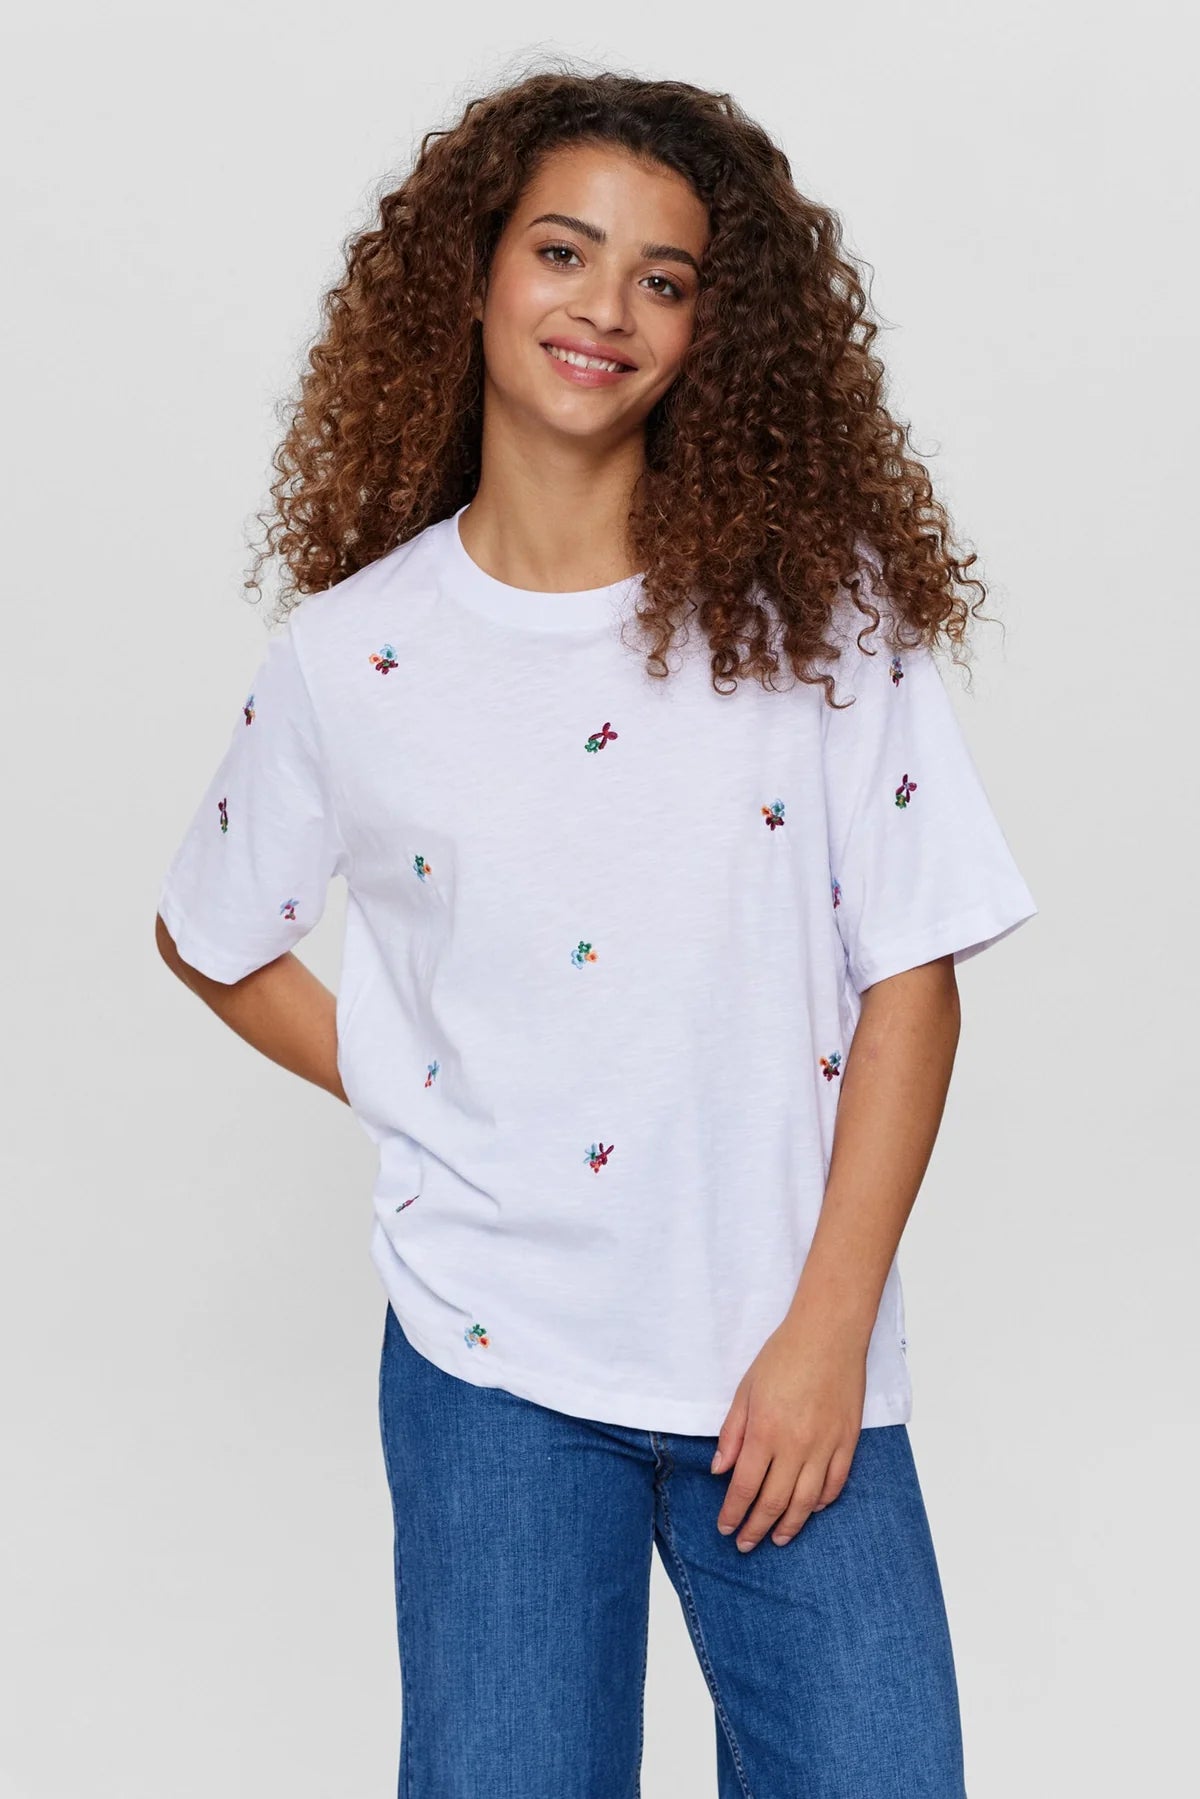 NuElena T-Shirt White